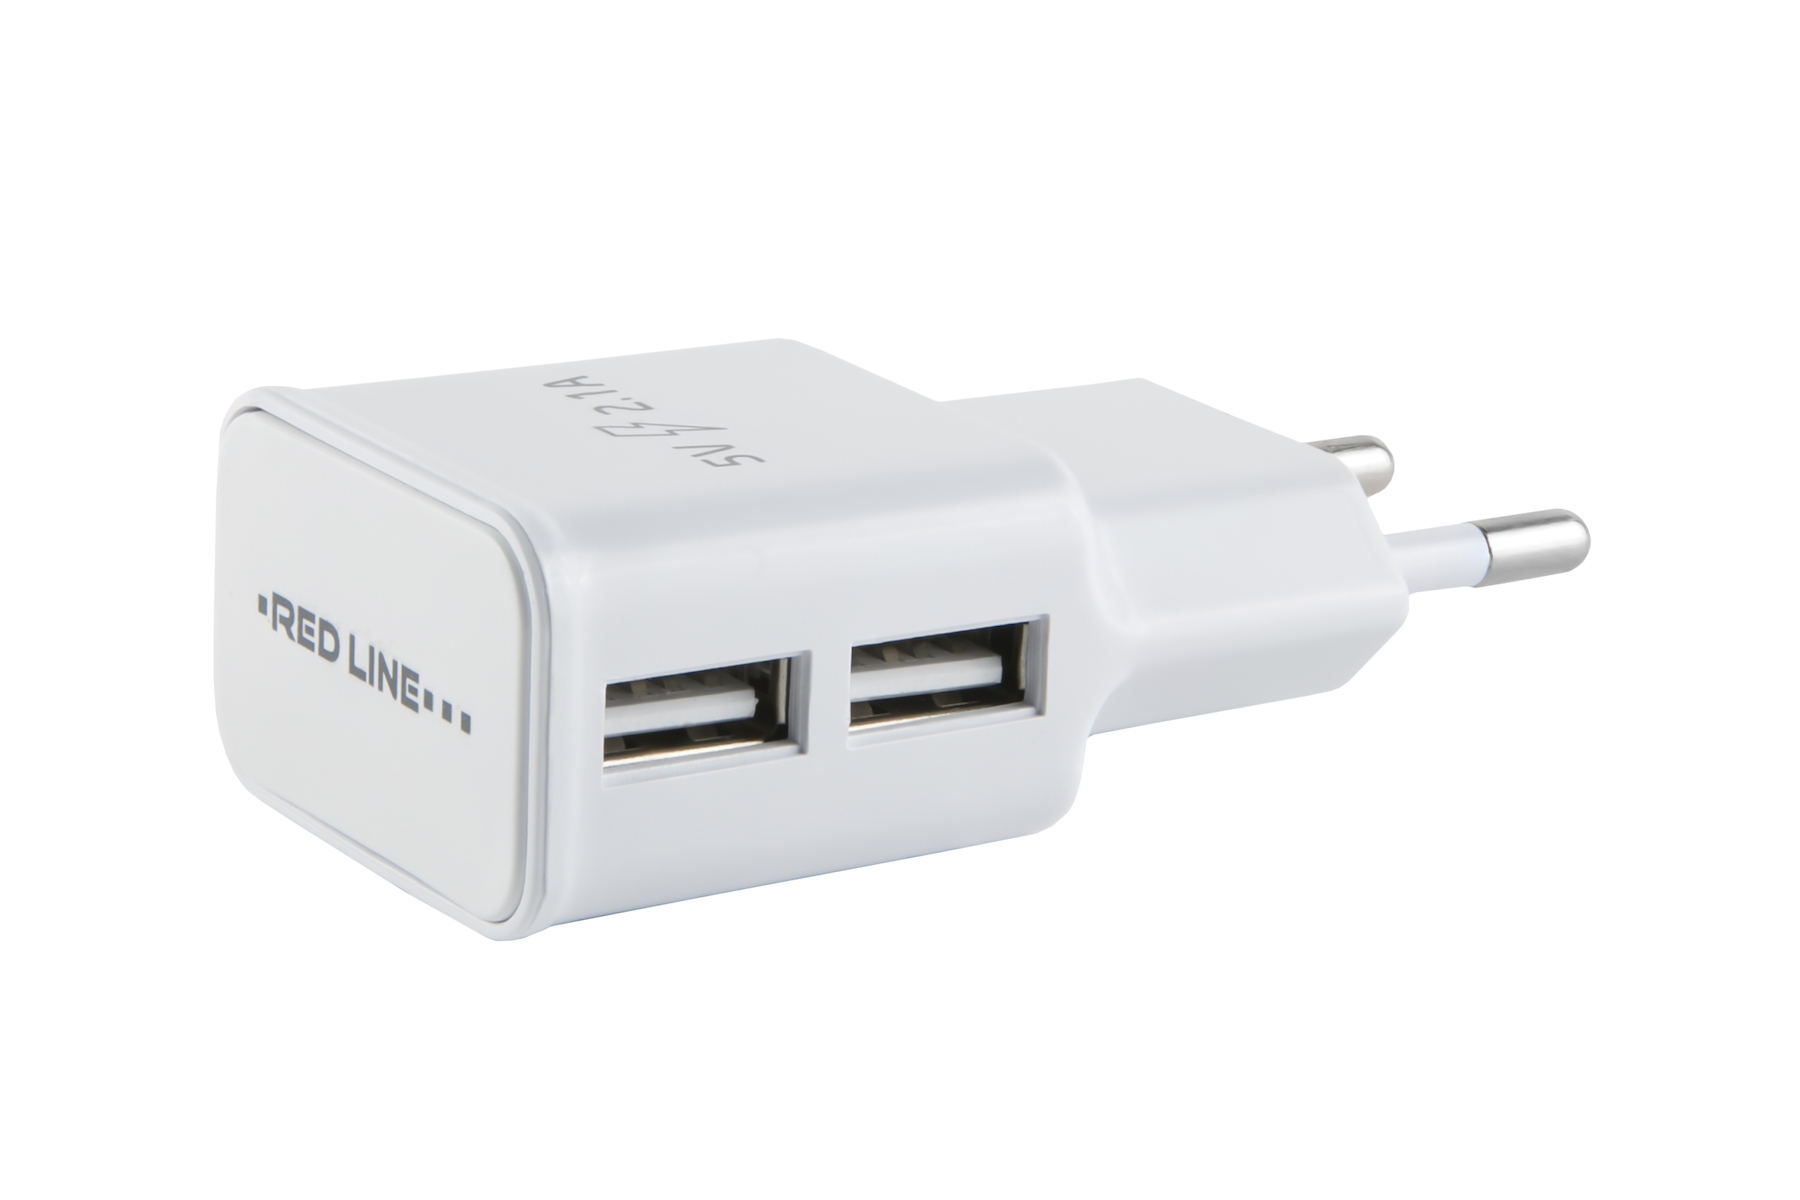 СЗУ Red Line 2 USB (модель NT-2A), 2.1A + кабель 8pin для Apple